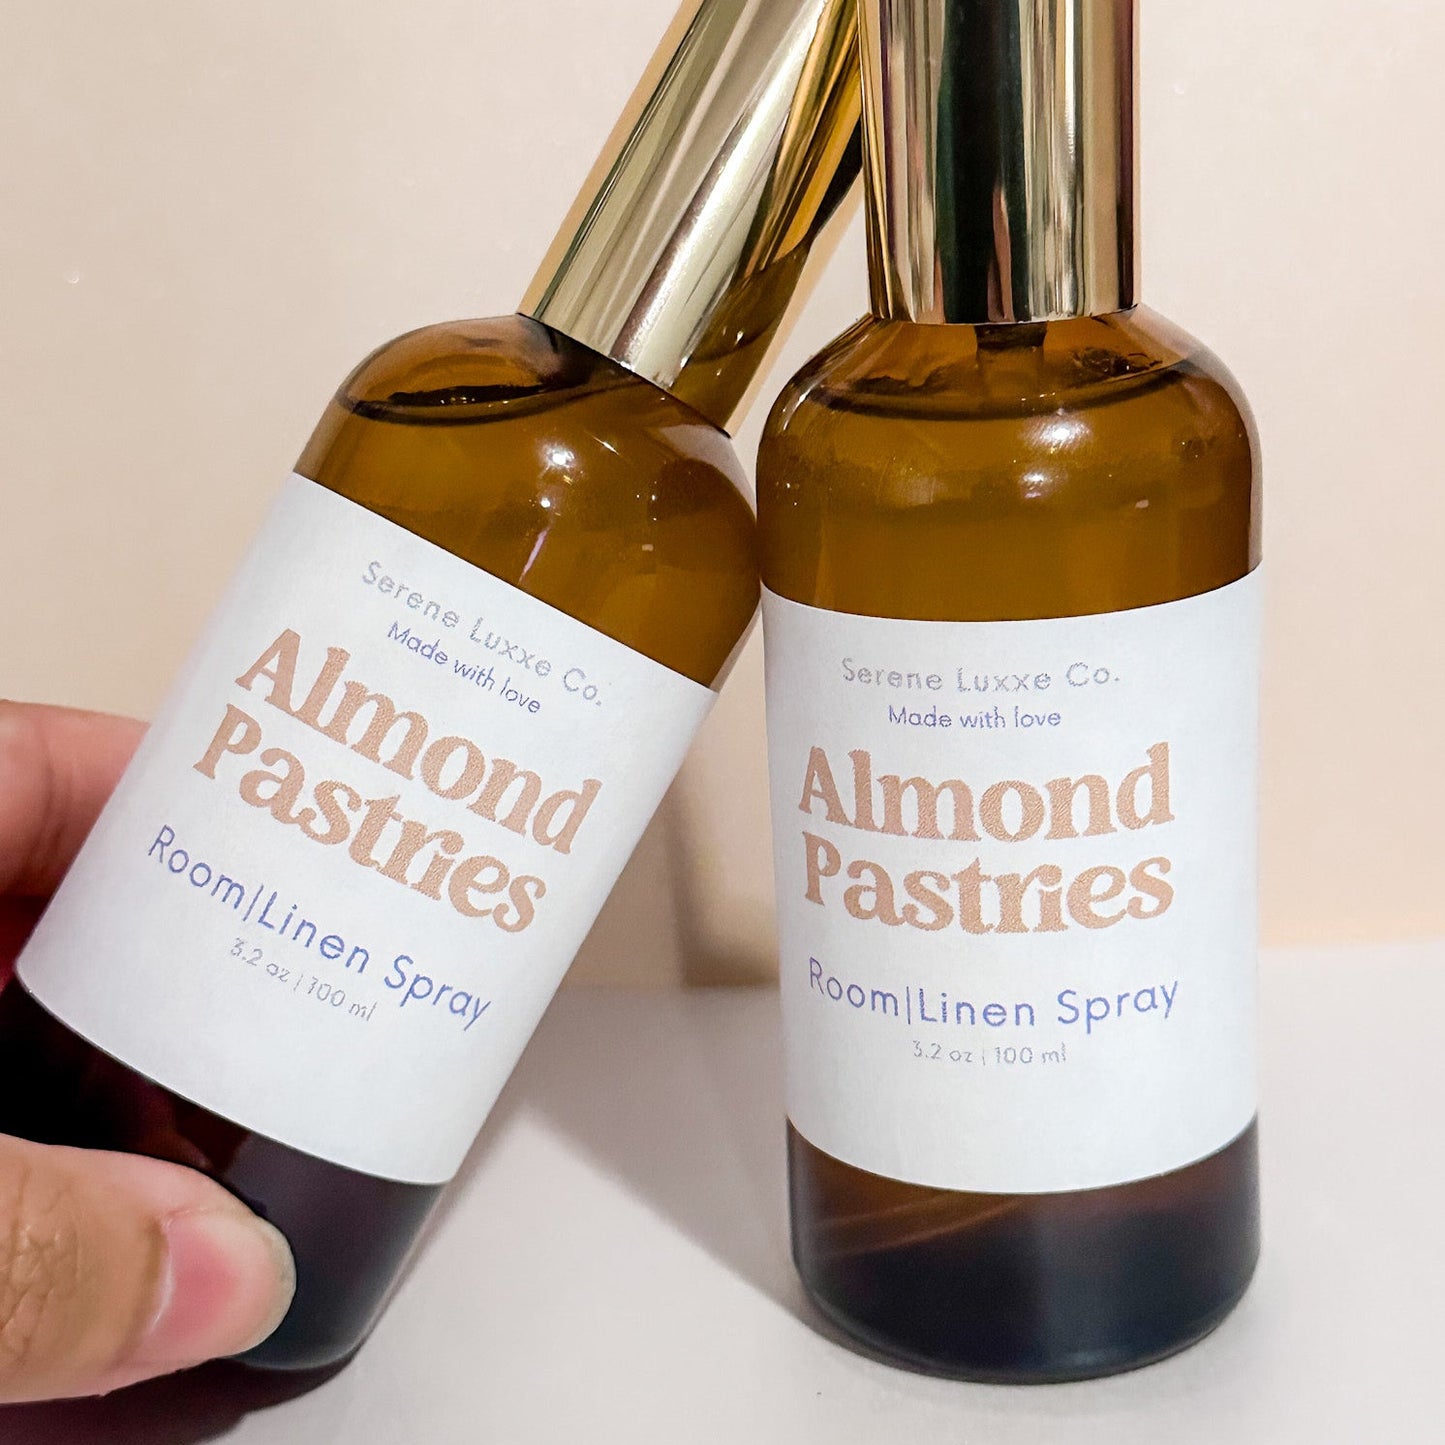 Almond  Pastries Room/Linen Spray